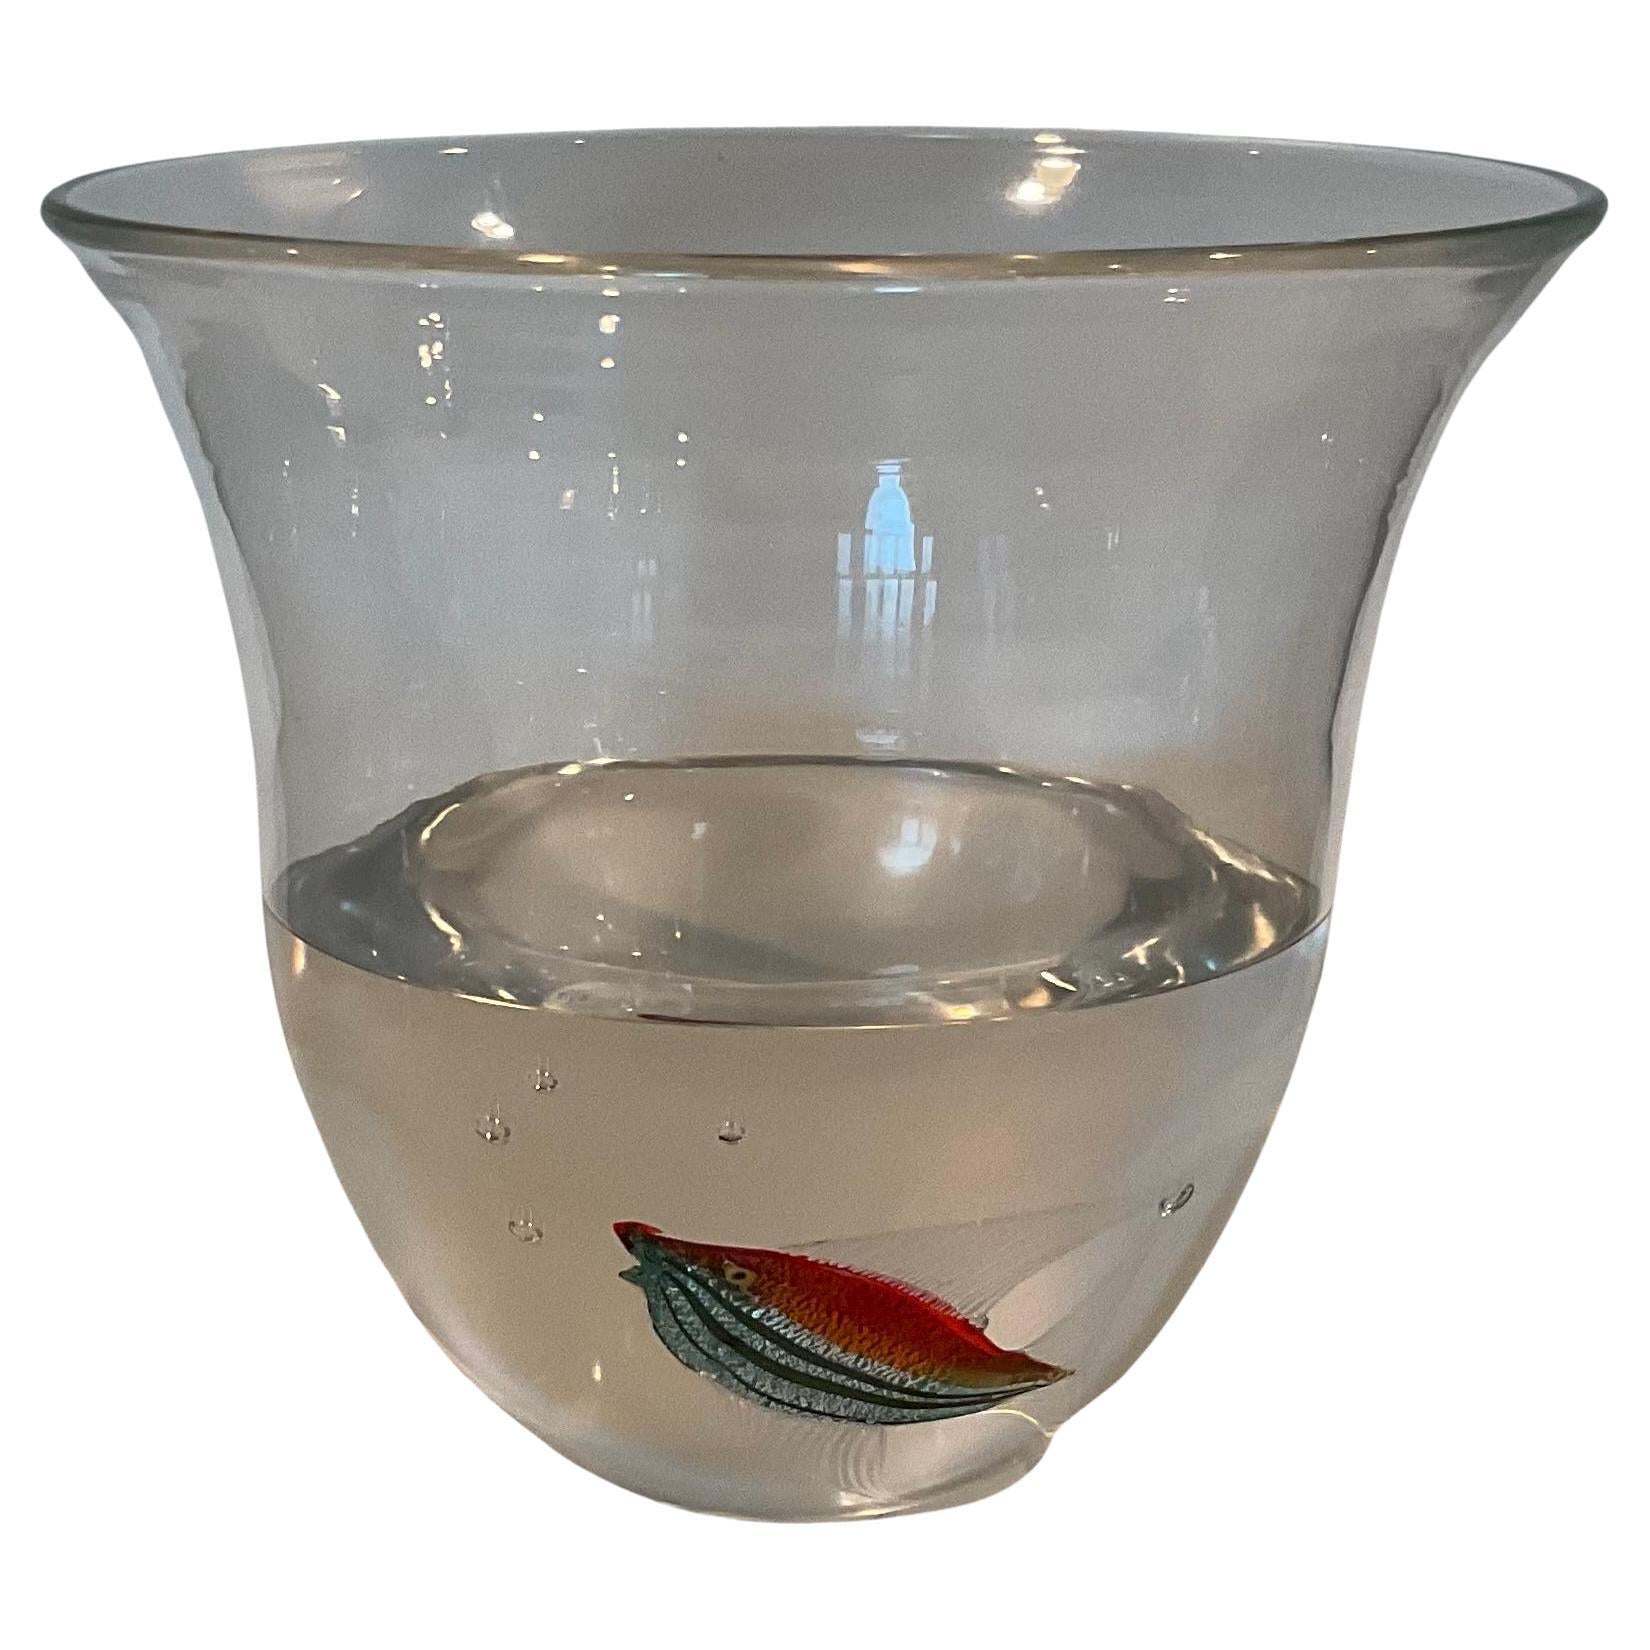 Pino Signoretto Murano Art Glass Aquarium Vase signed by the artist dated 1985 